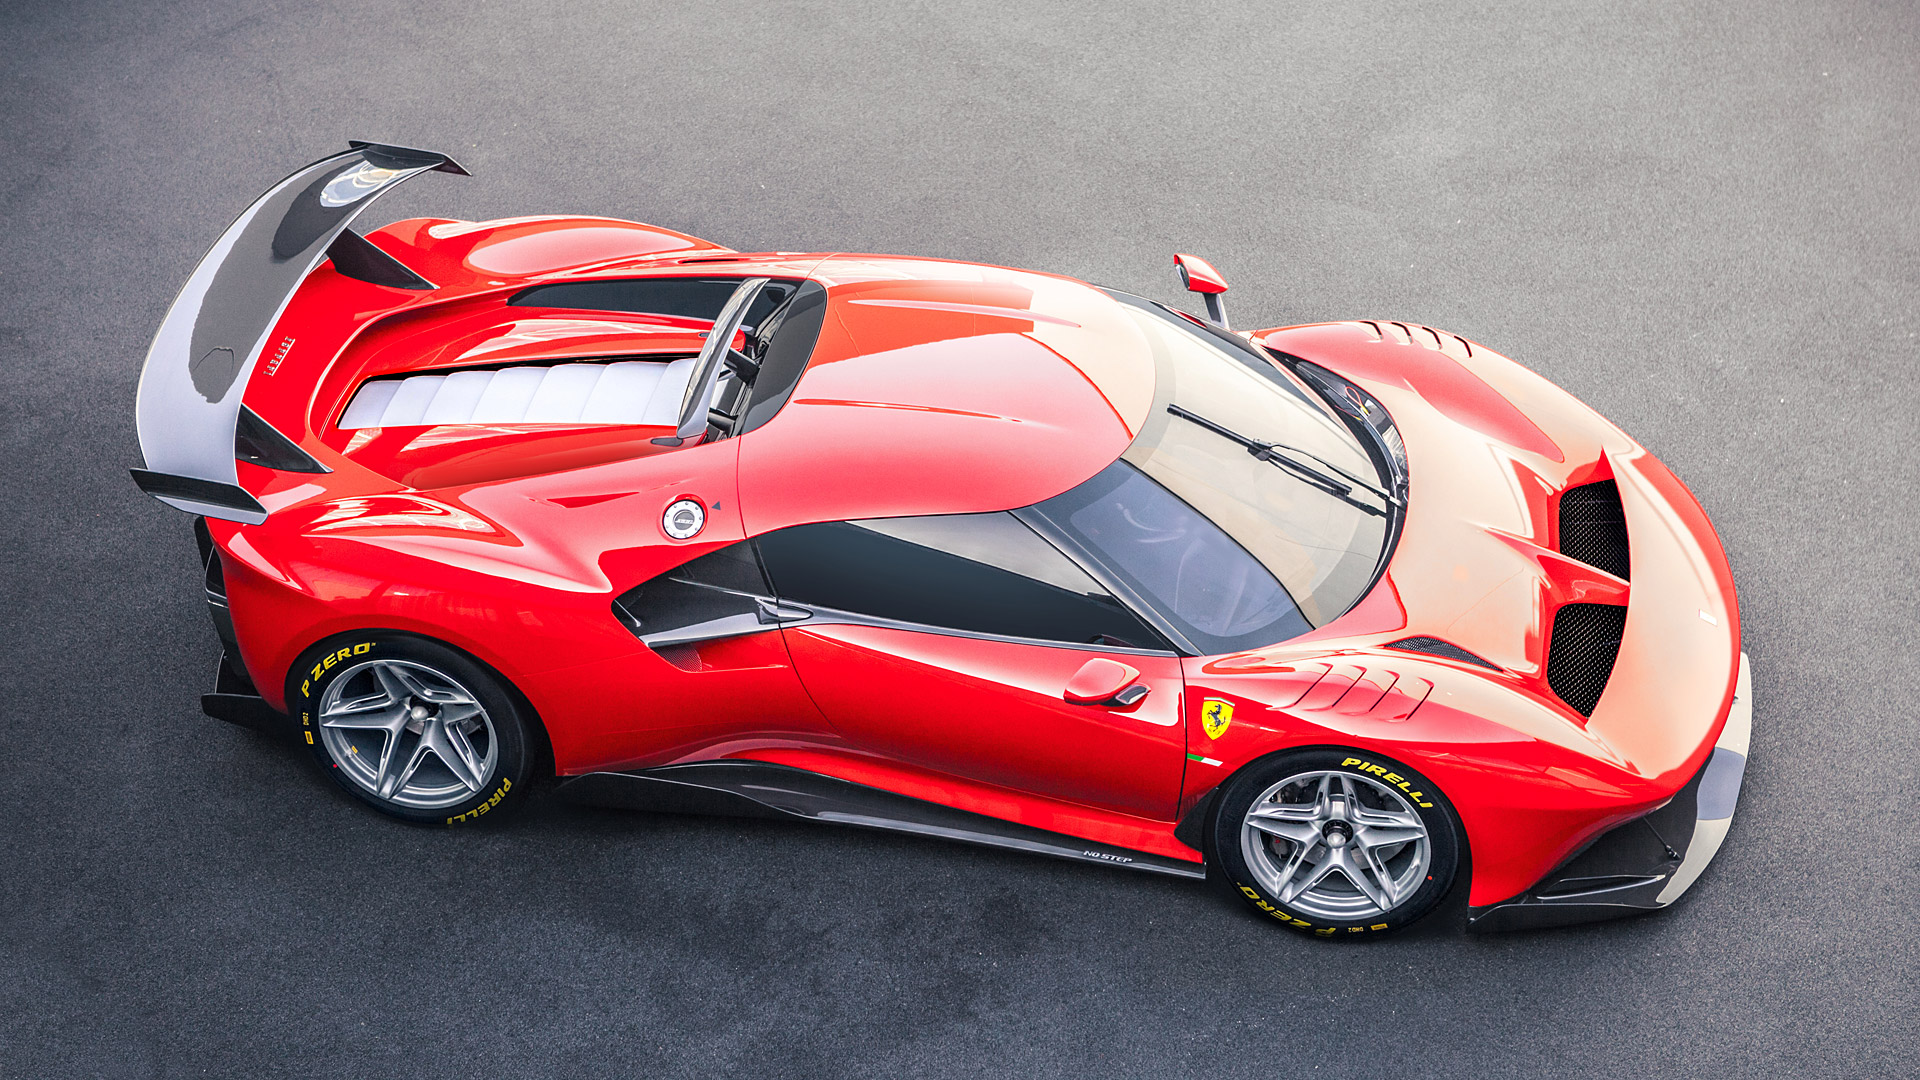  2019 Ferrari P80/C Wallpaper.